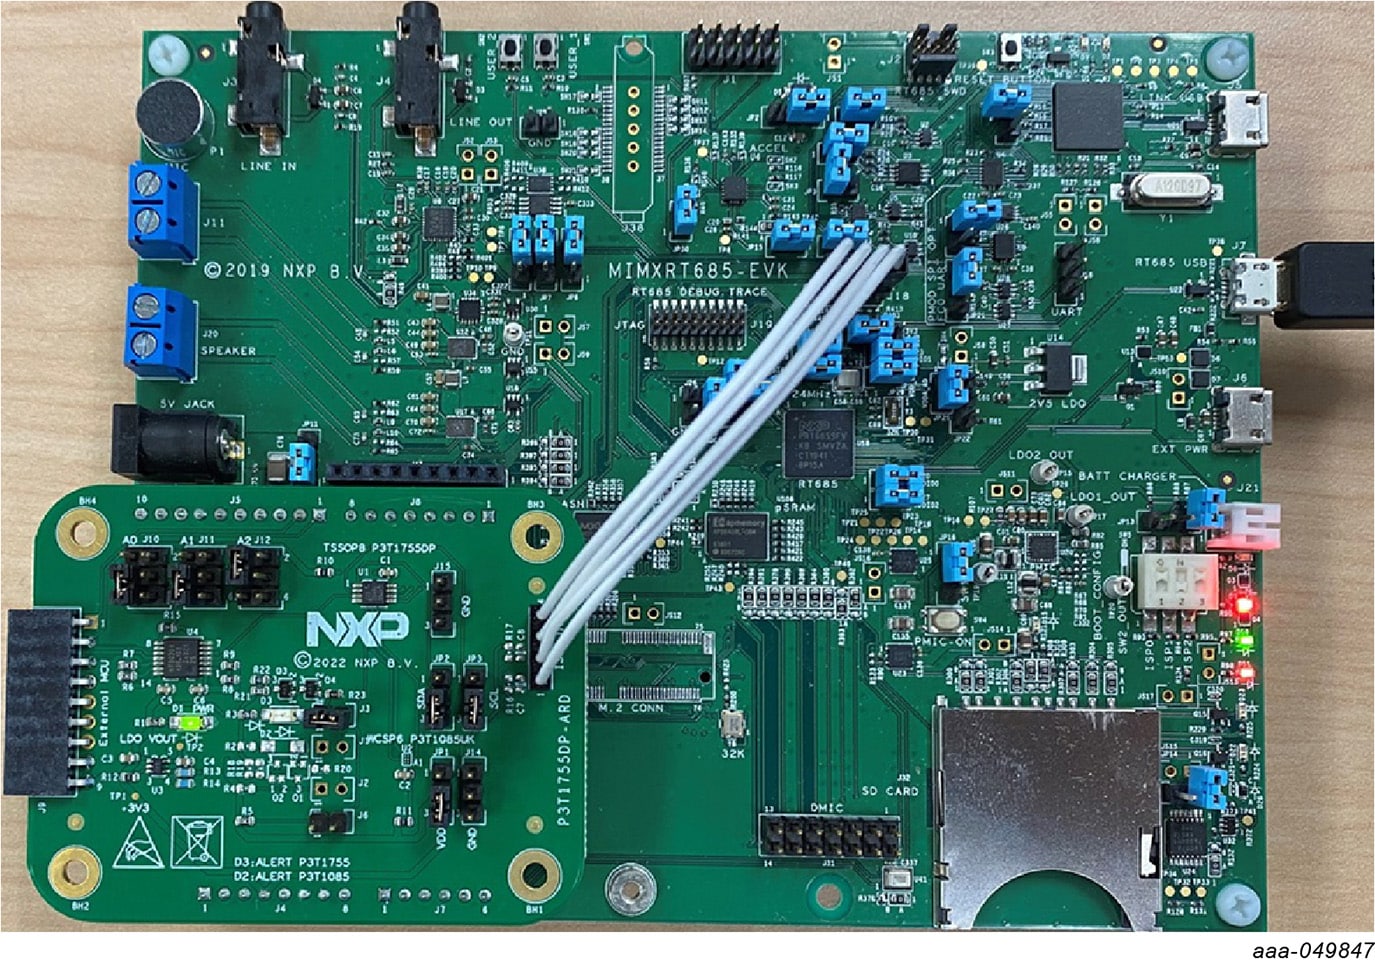 P3T1755DP-ARD评估板连接到MIMXRT685-EVK MCU板